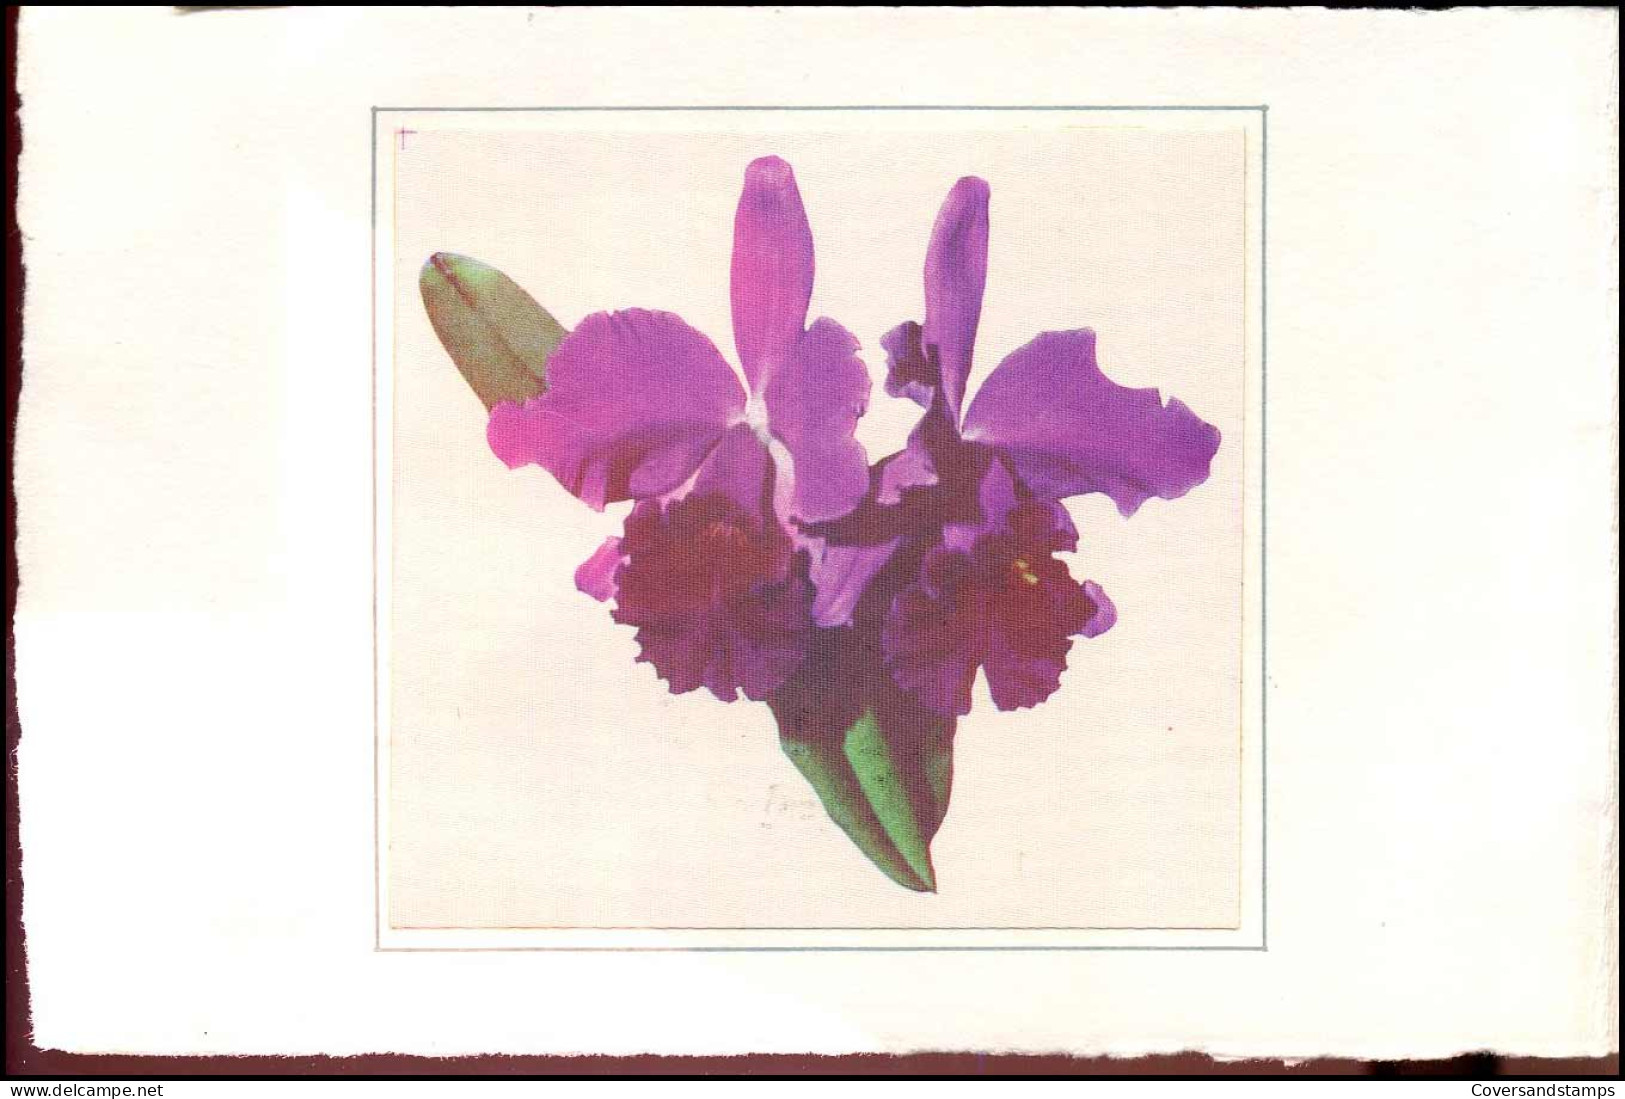 Gentse Floraliën 1970 - BL47 - Souvenir - Briefe U. Dokumente